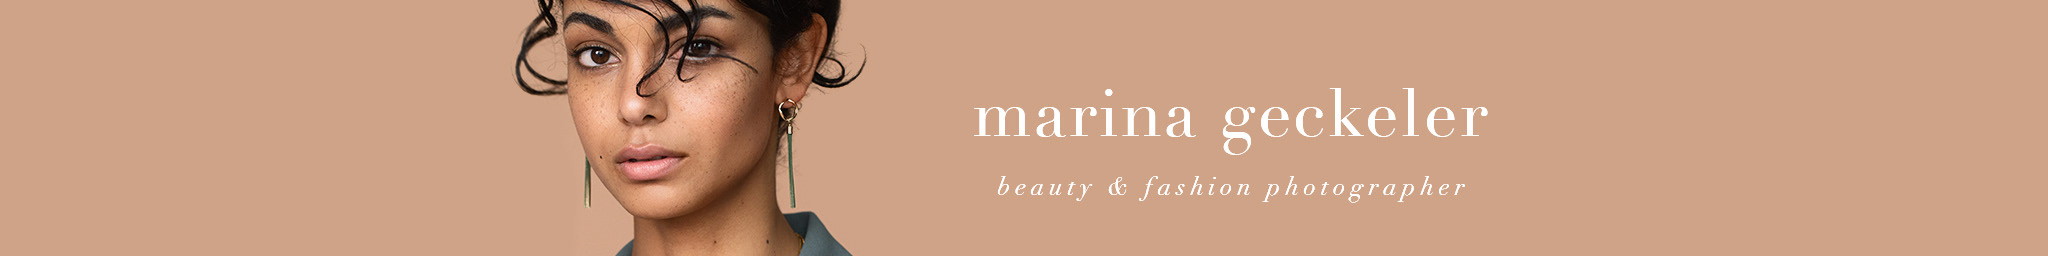 Marina Geckeler's profile banner